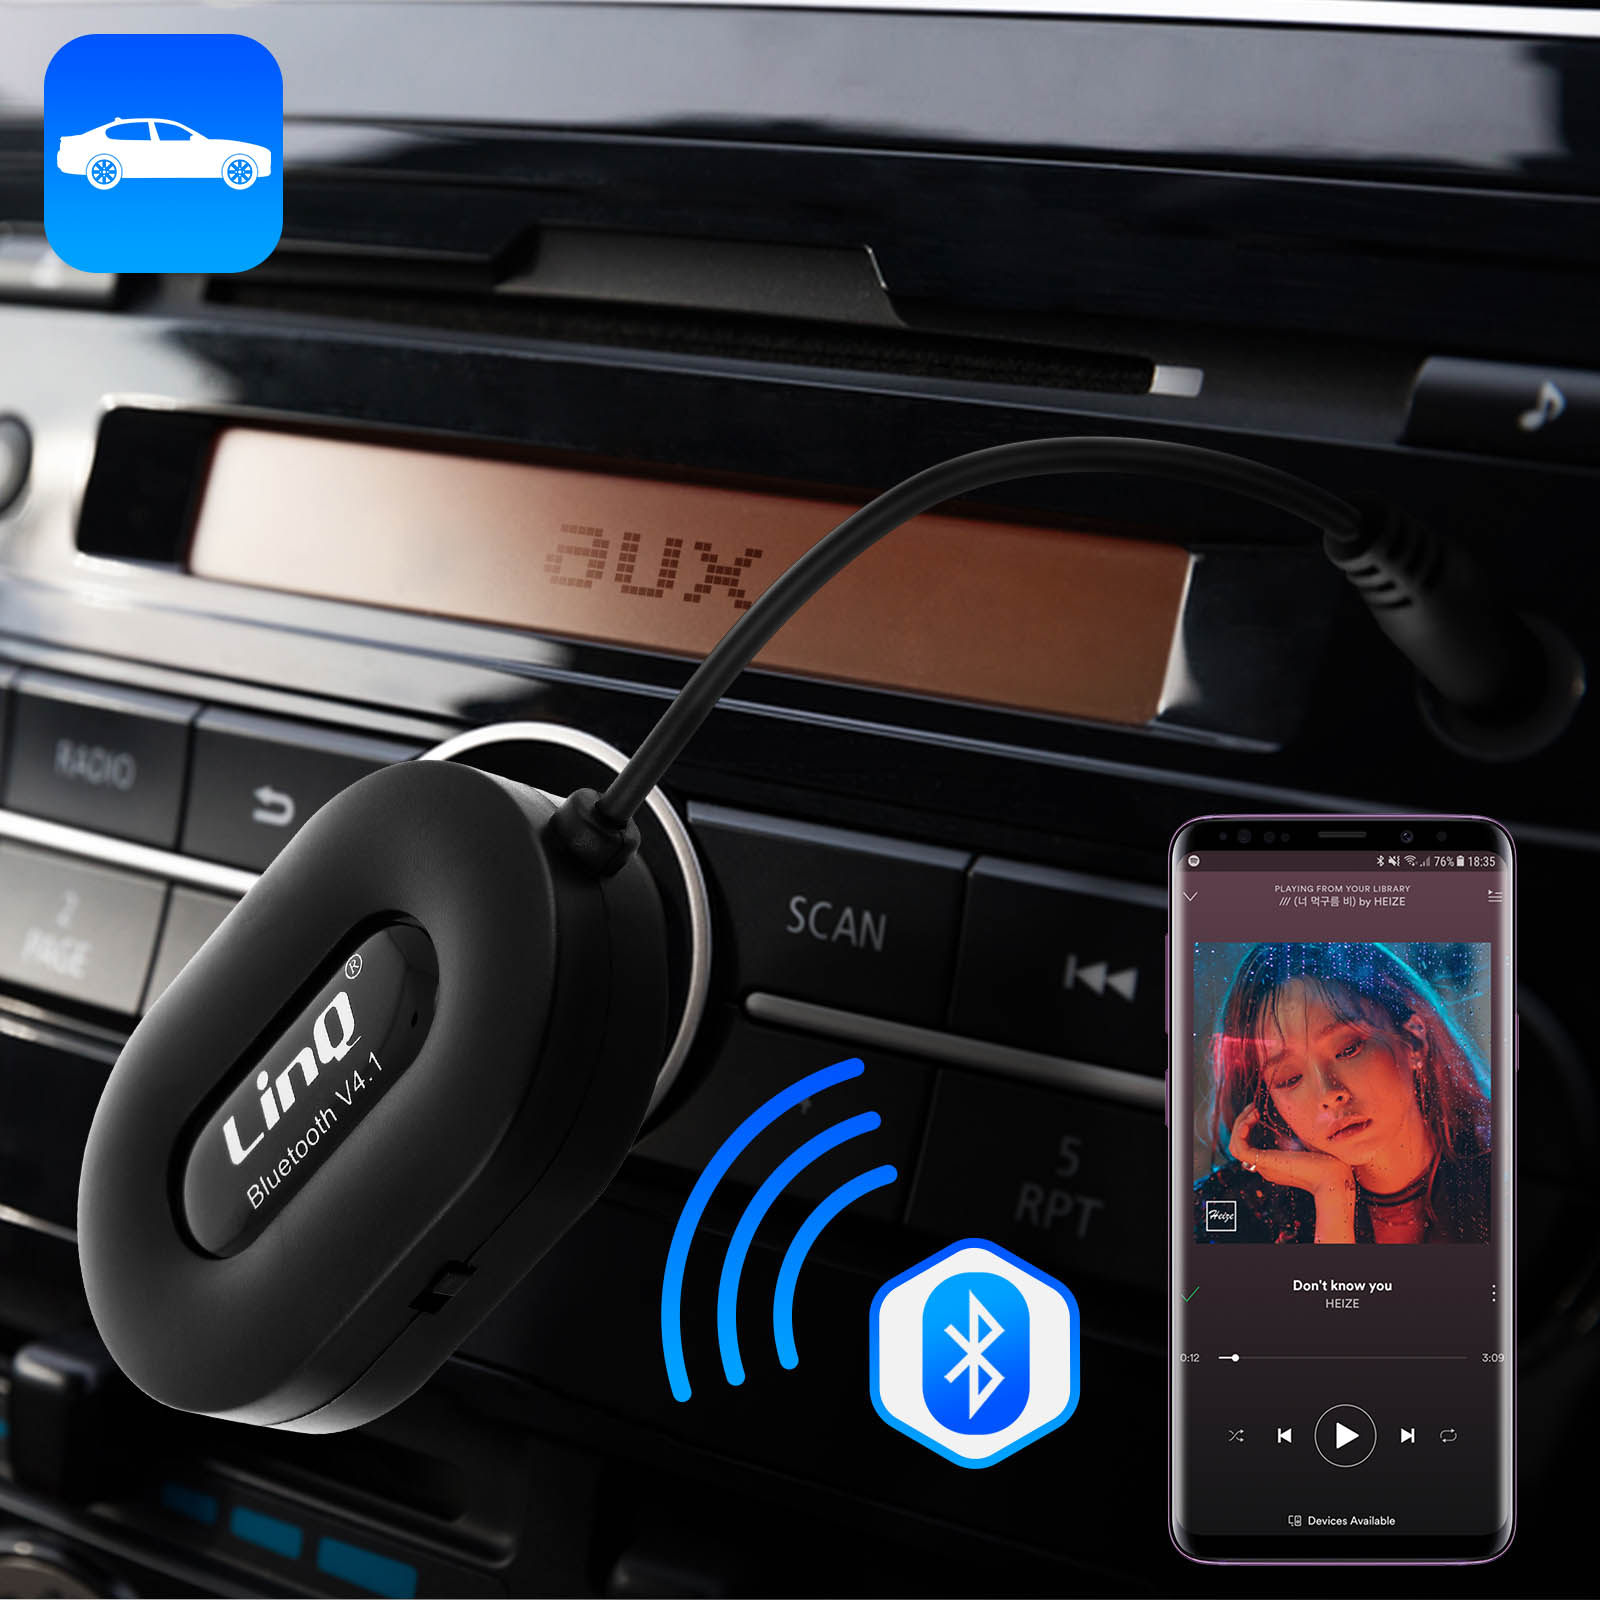 LINQ Bluetooth 4.1 Transmitter Audio-Empfänger, Empfänger Audio Bluetooth